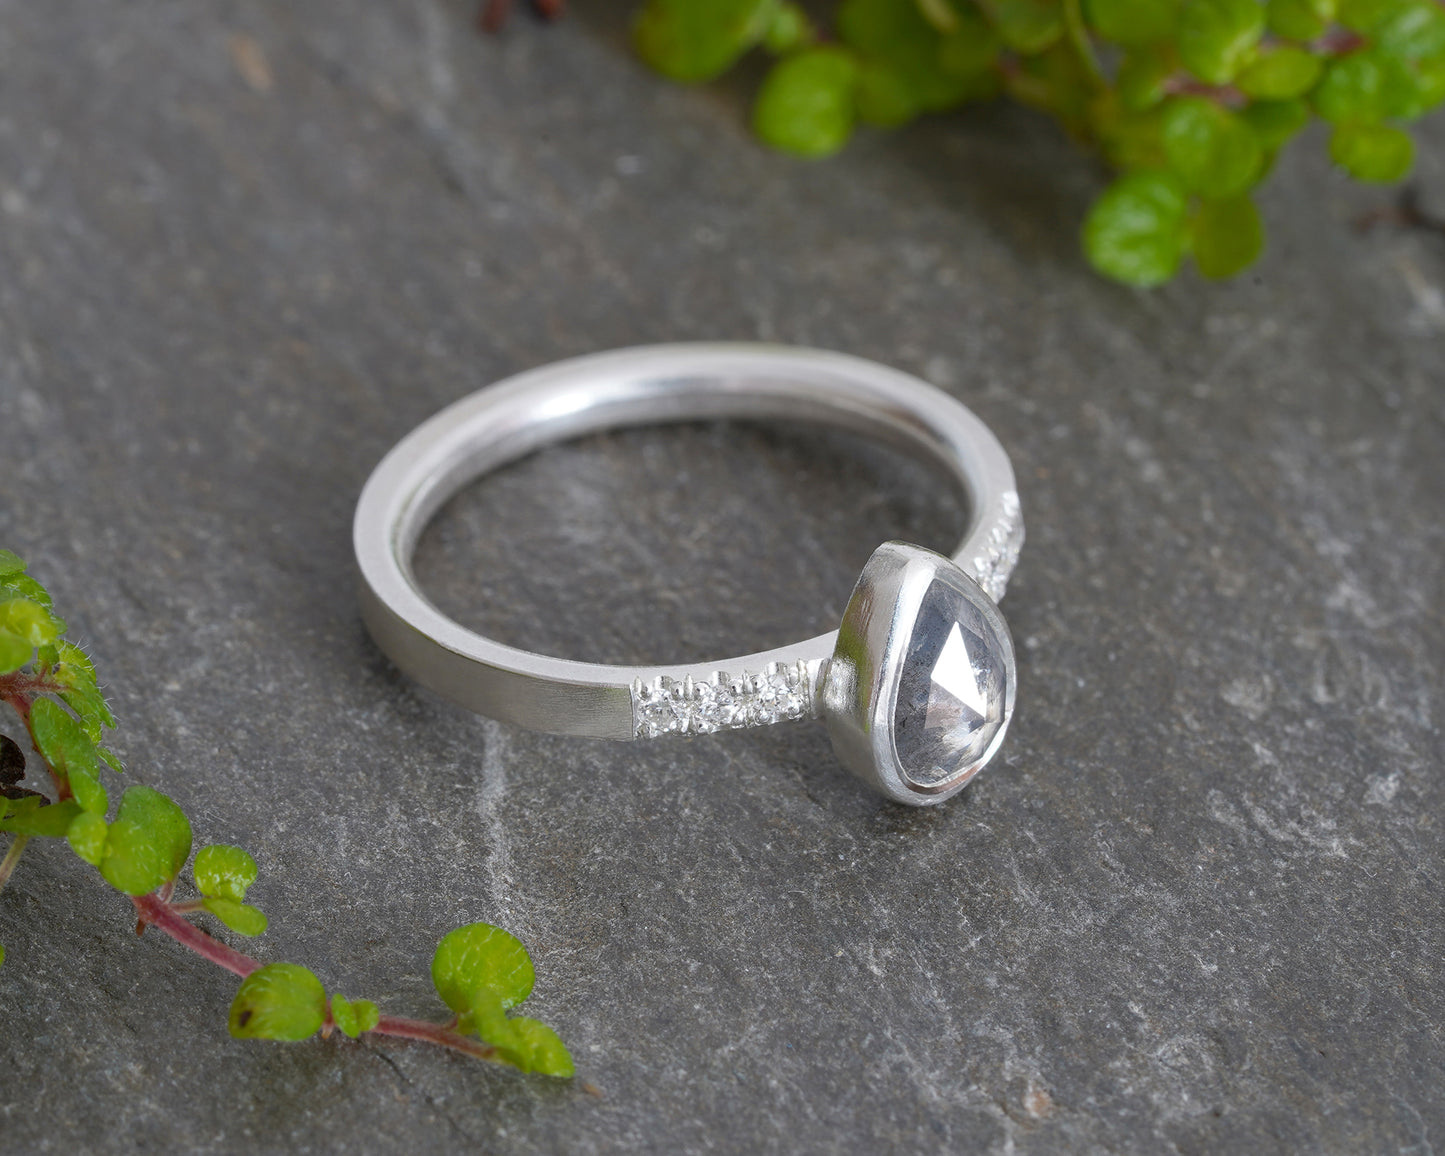 Salt & Pepper Diamond Engagement Ring with Shoulder Diamonds